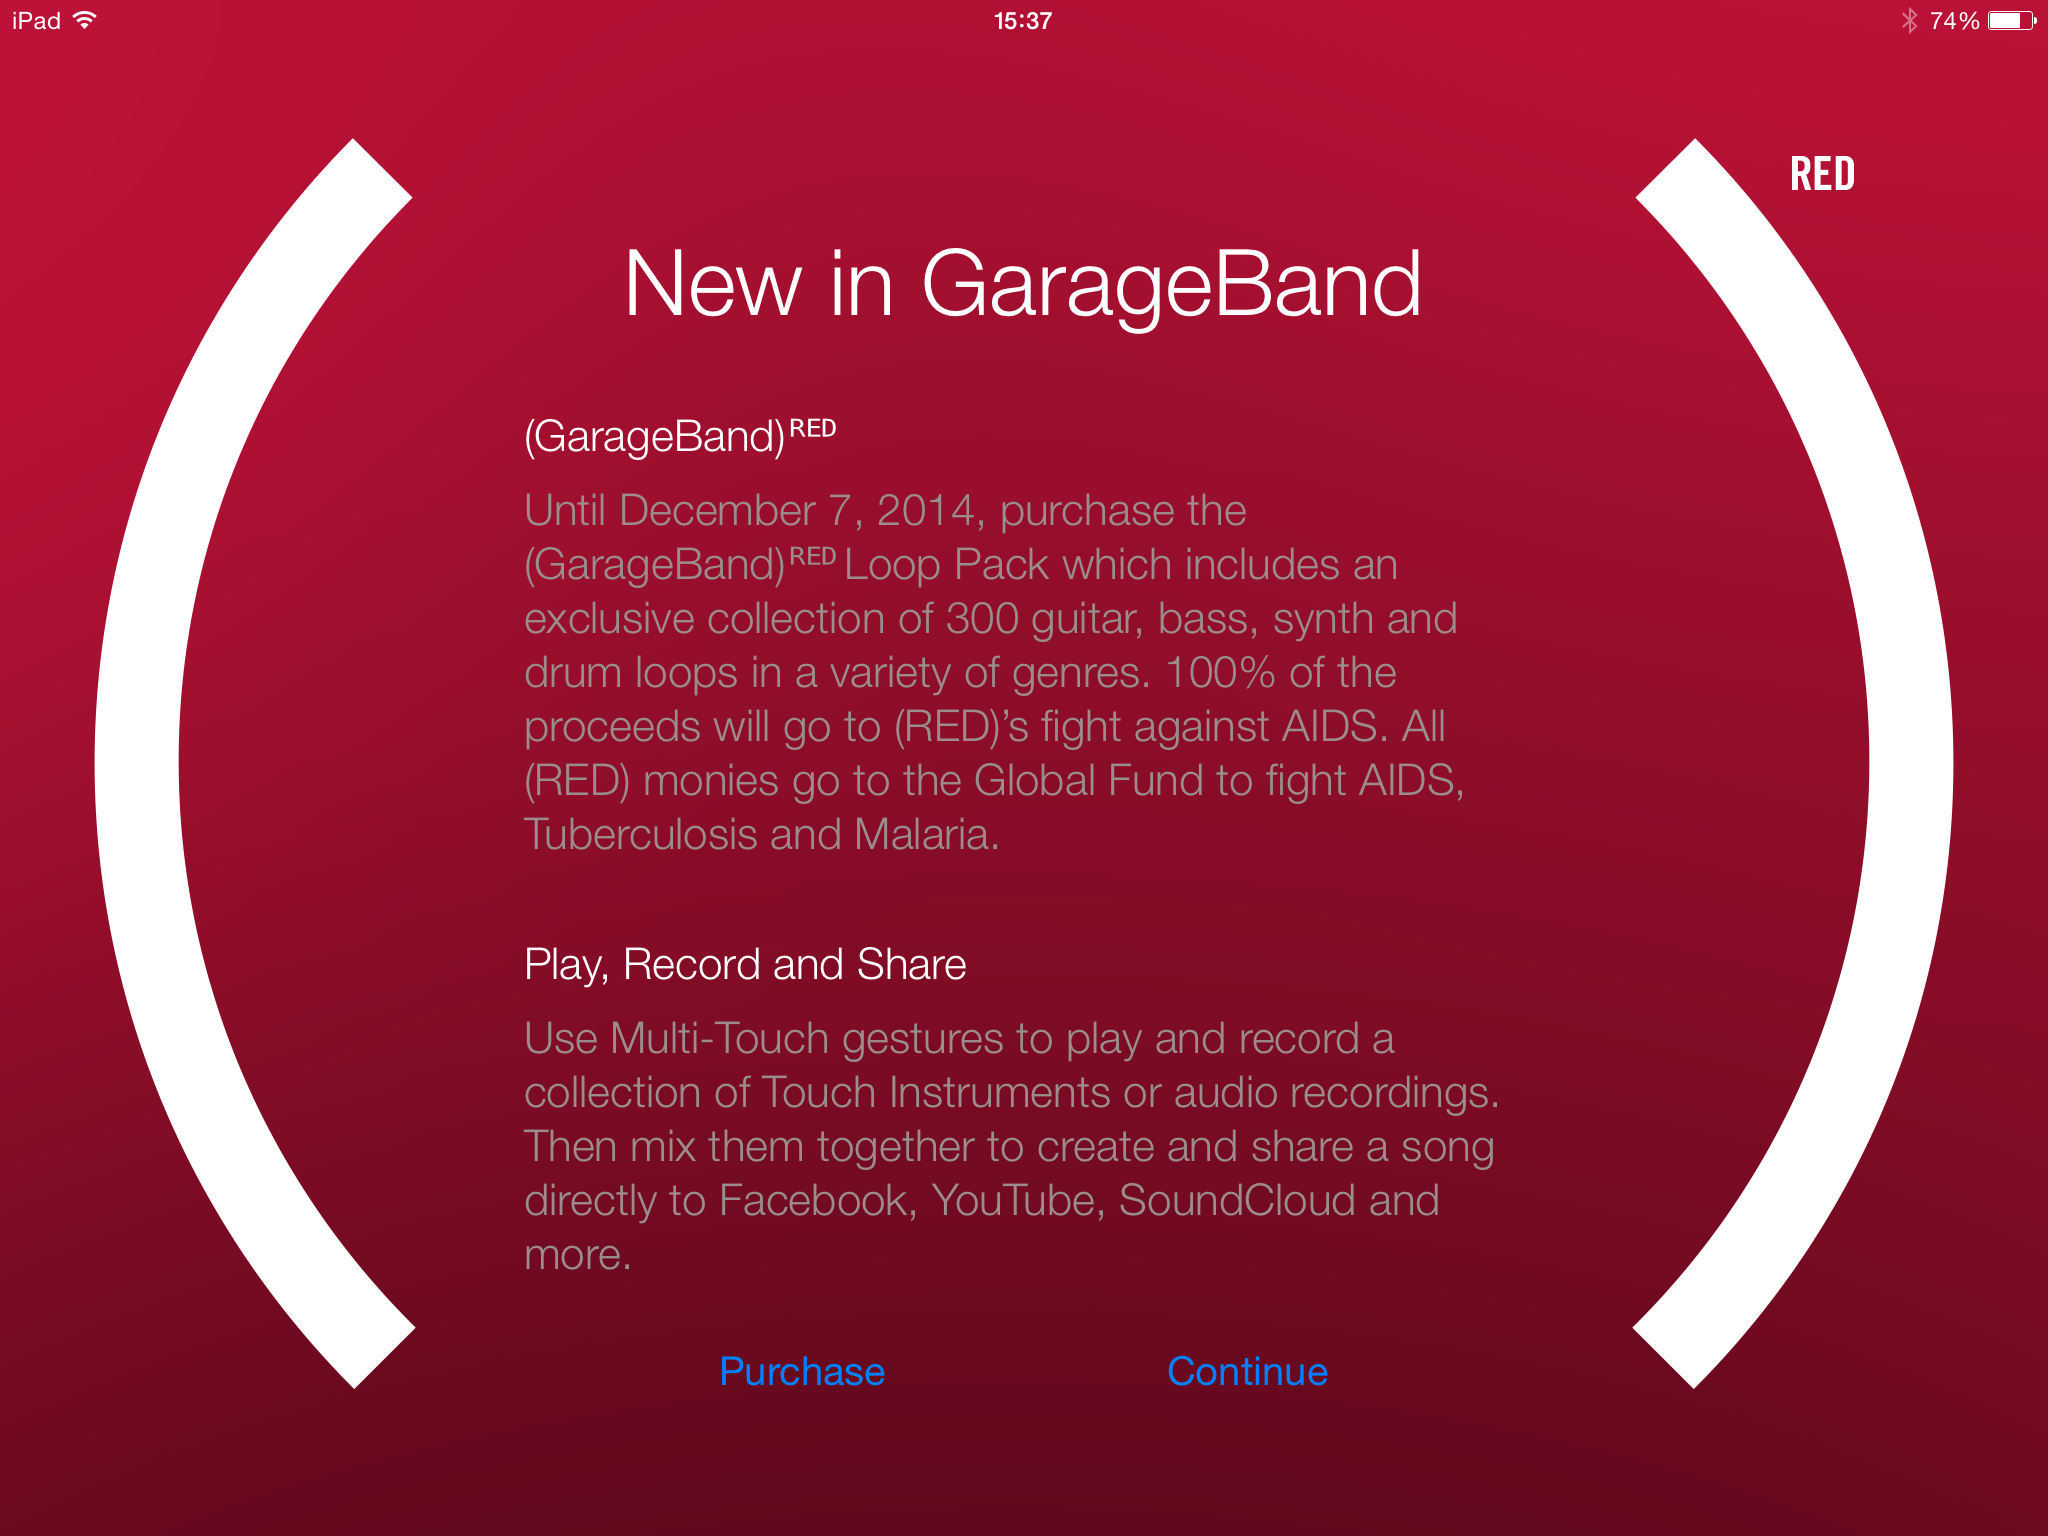 GarageBand Red